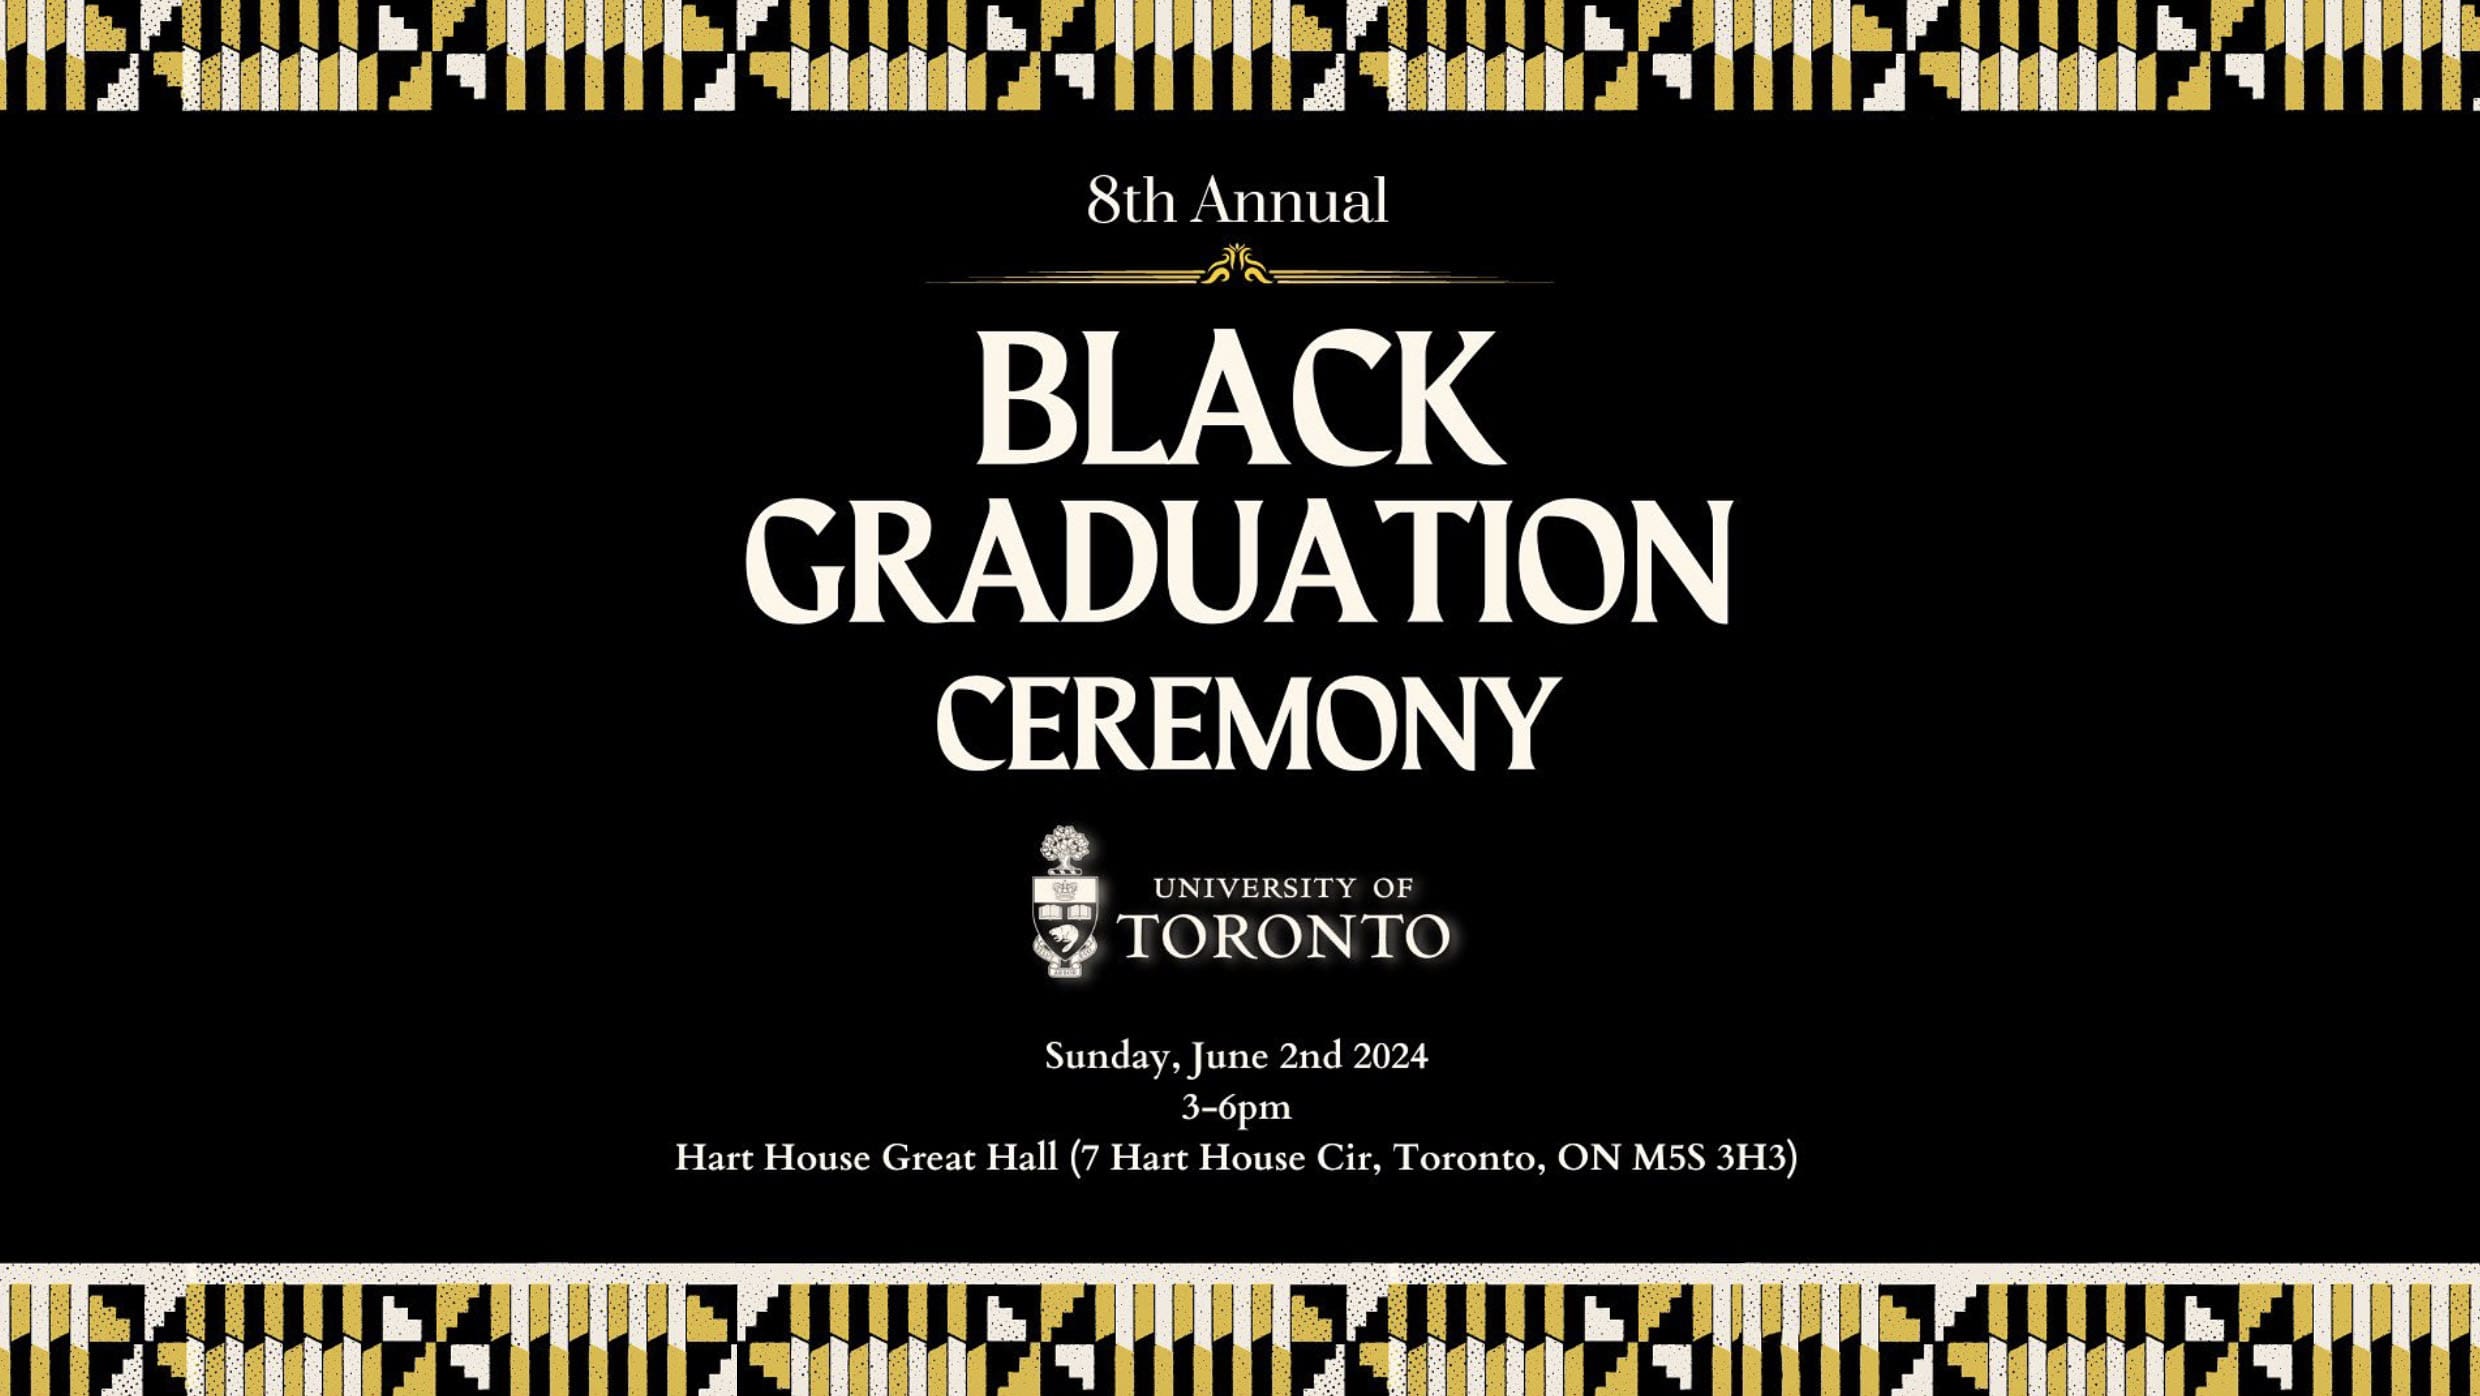 Black Graduation Ceremony Promotional Image